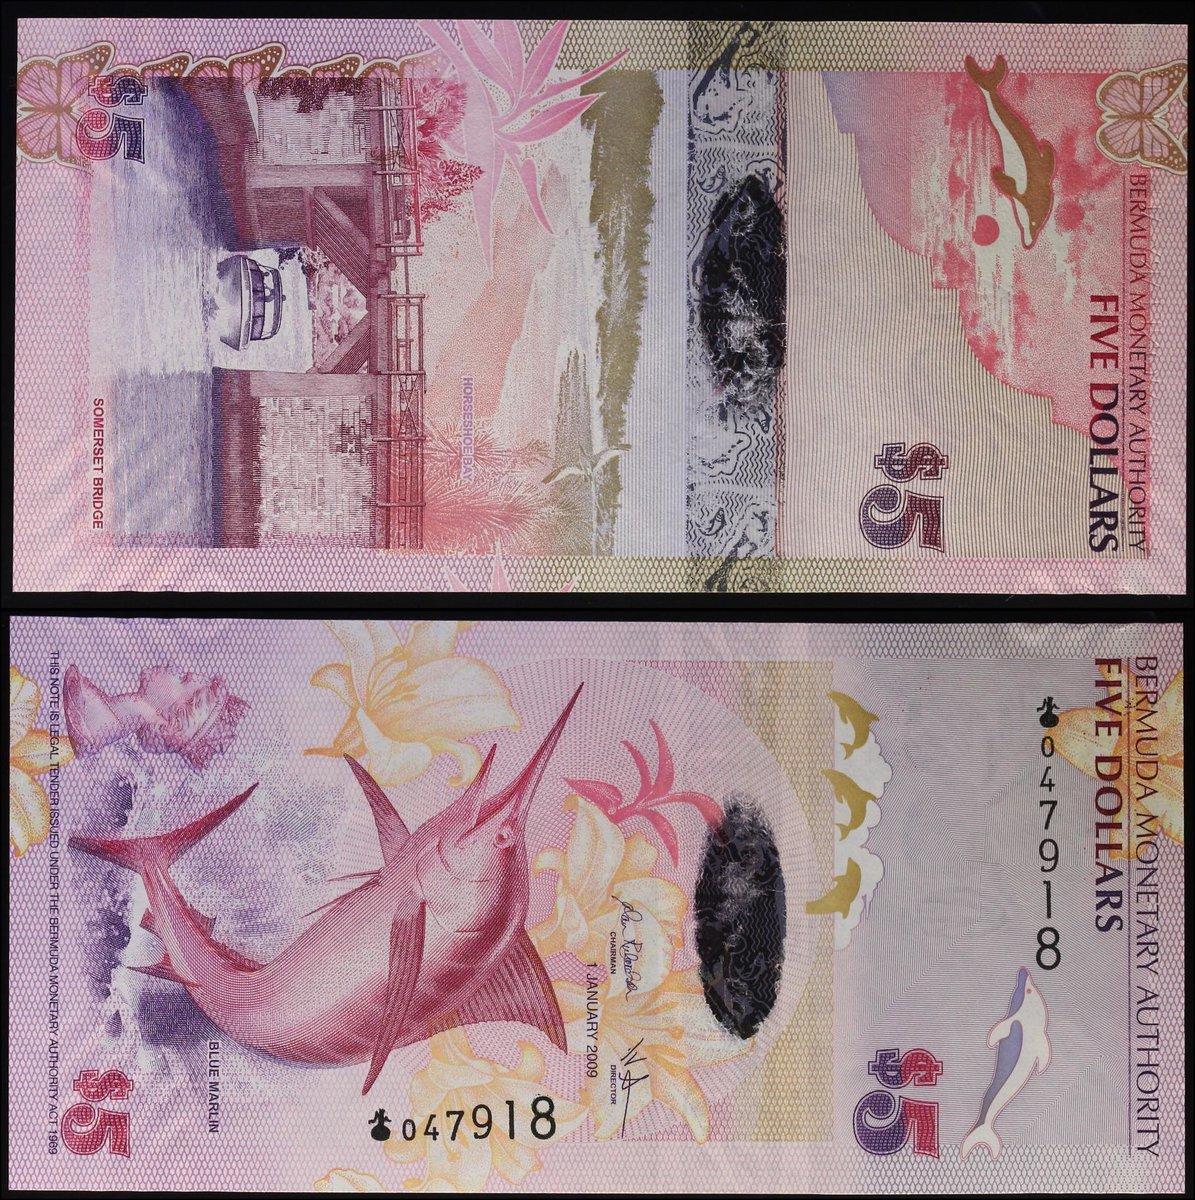 Bermuda 5 Dollars p-58 2009 UNC Banknote